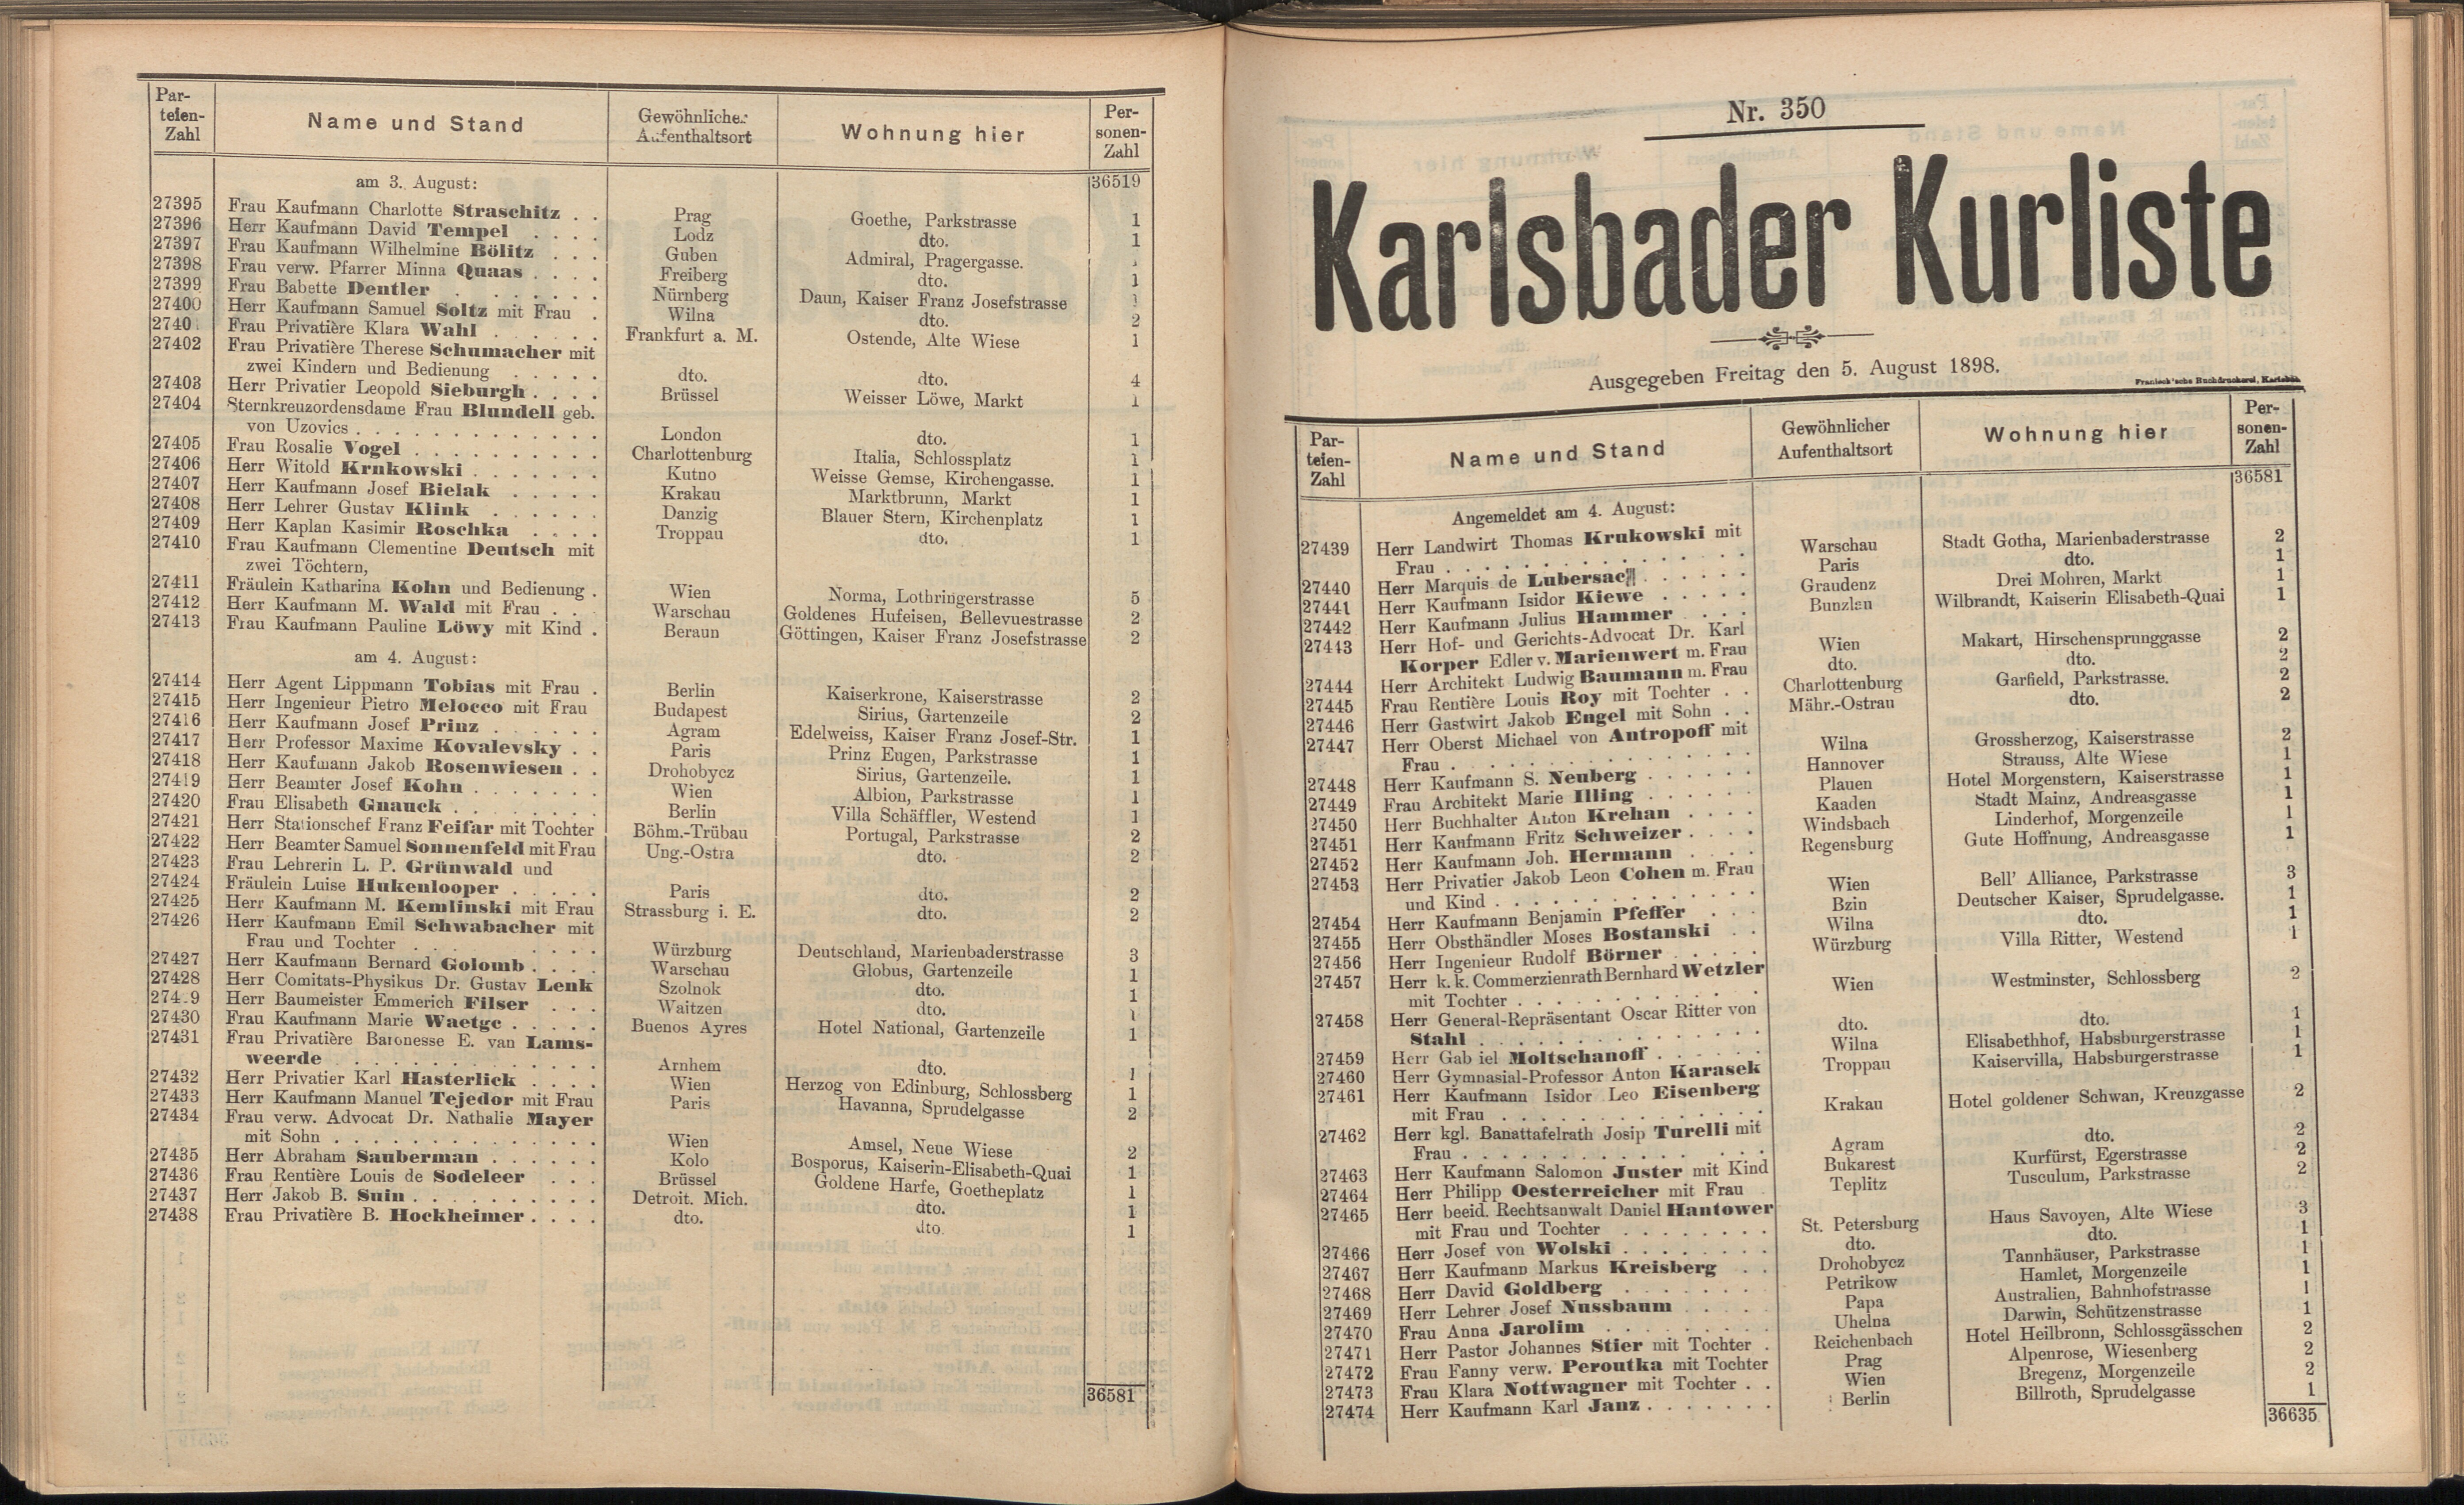 366. soap-kv_knihovna_karlsbader-kurliste-1898_3670